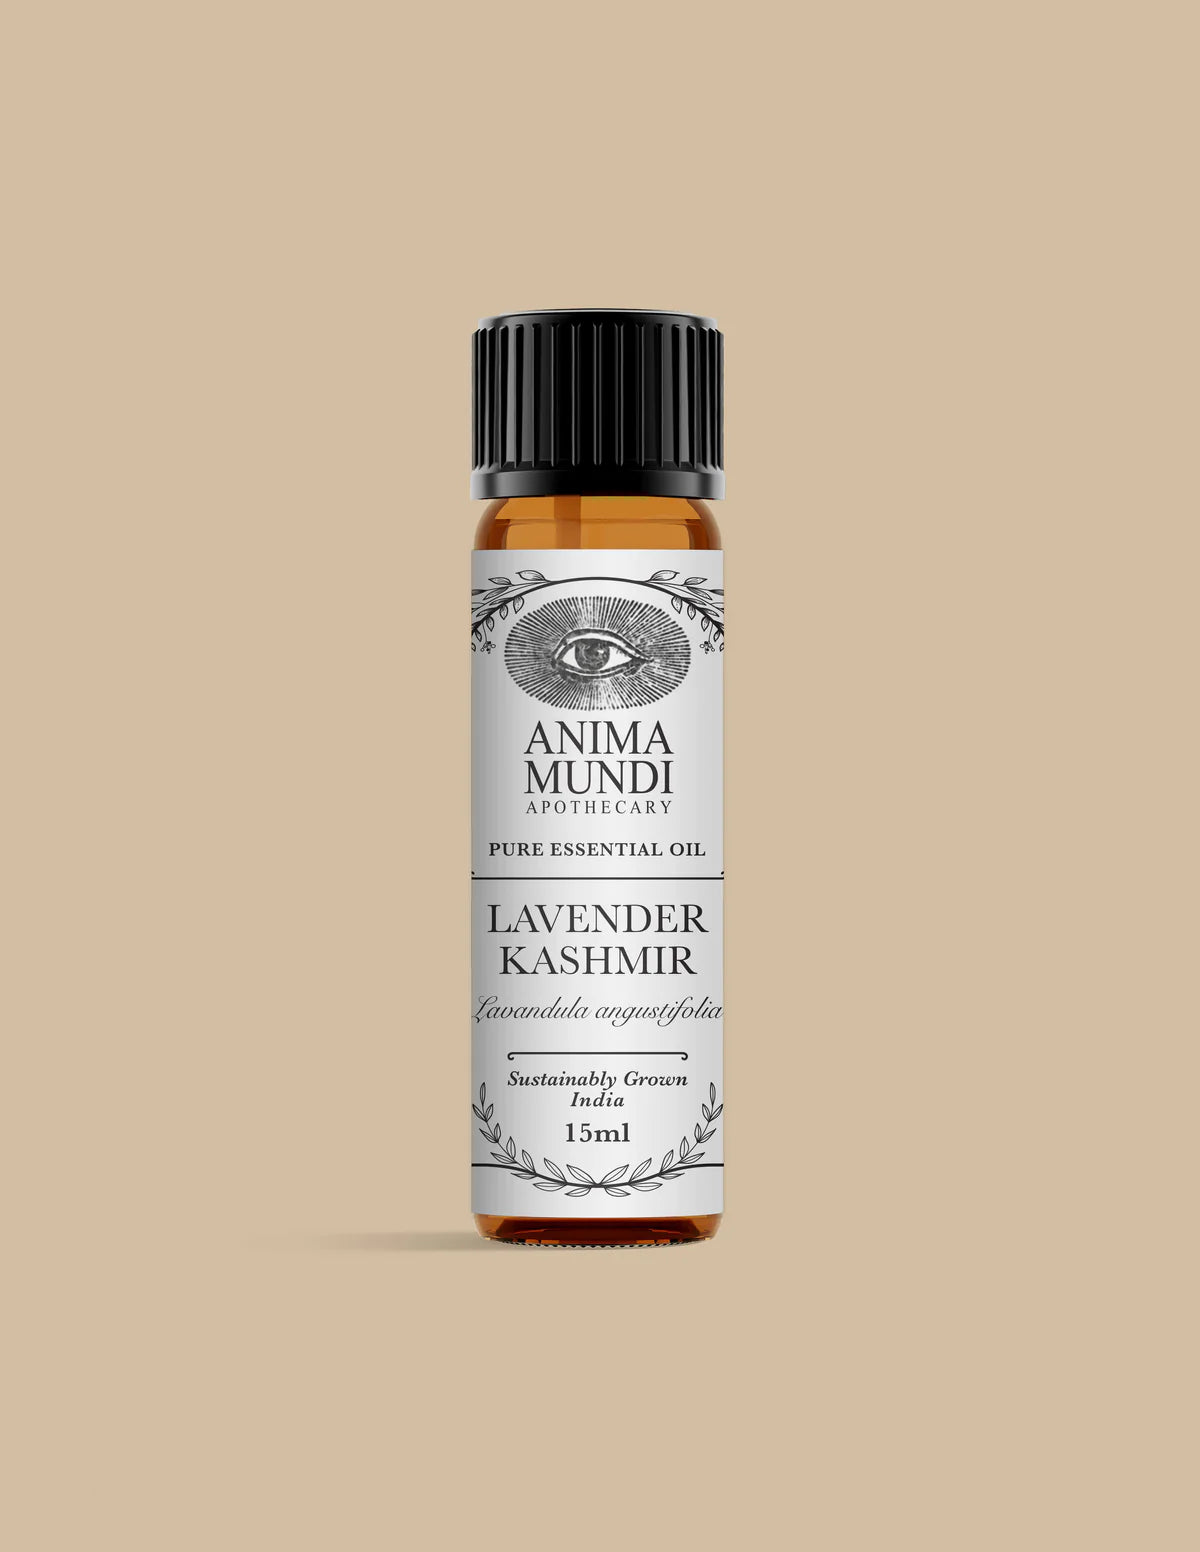 Anima Mundi - Lavender Kashmir Essential Oil